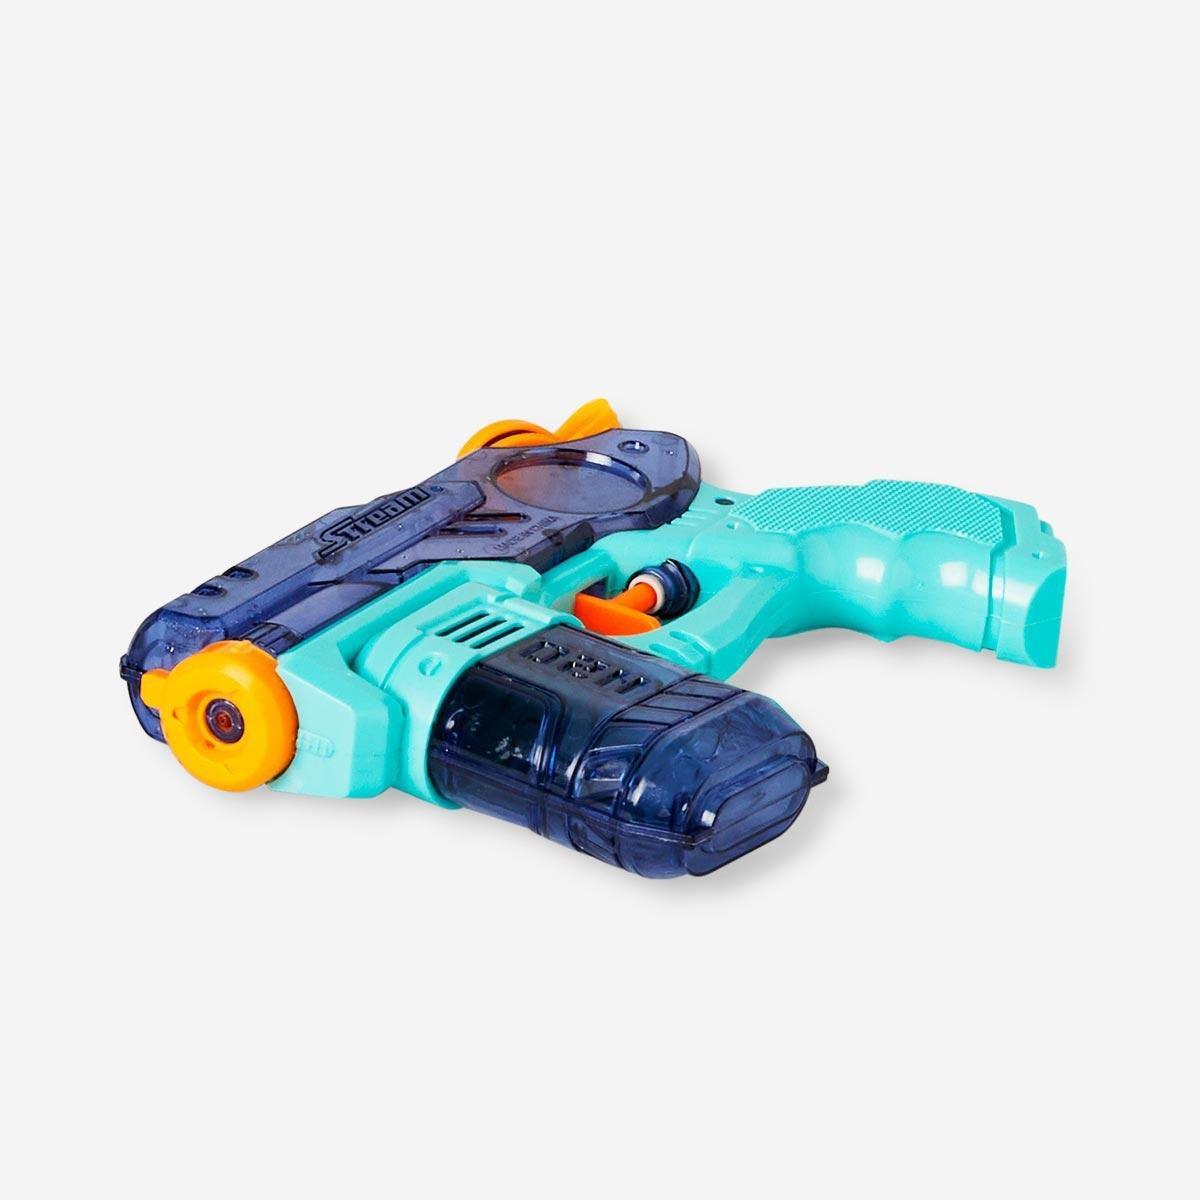 Turquoise water pistol